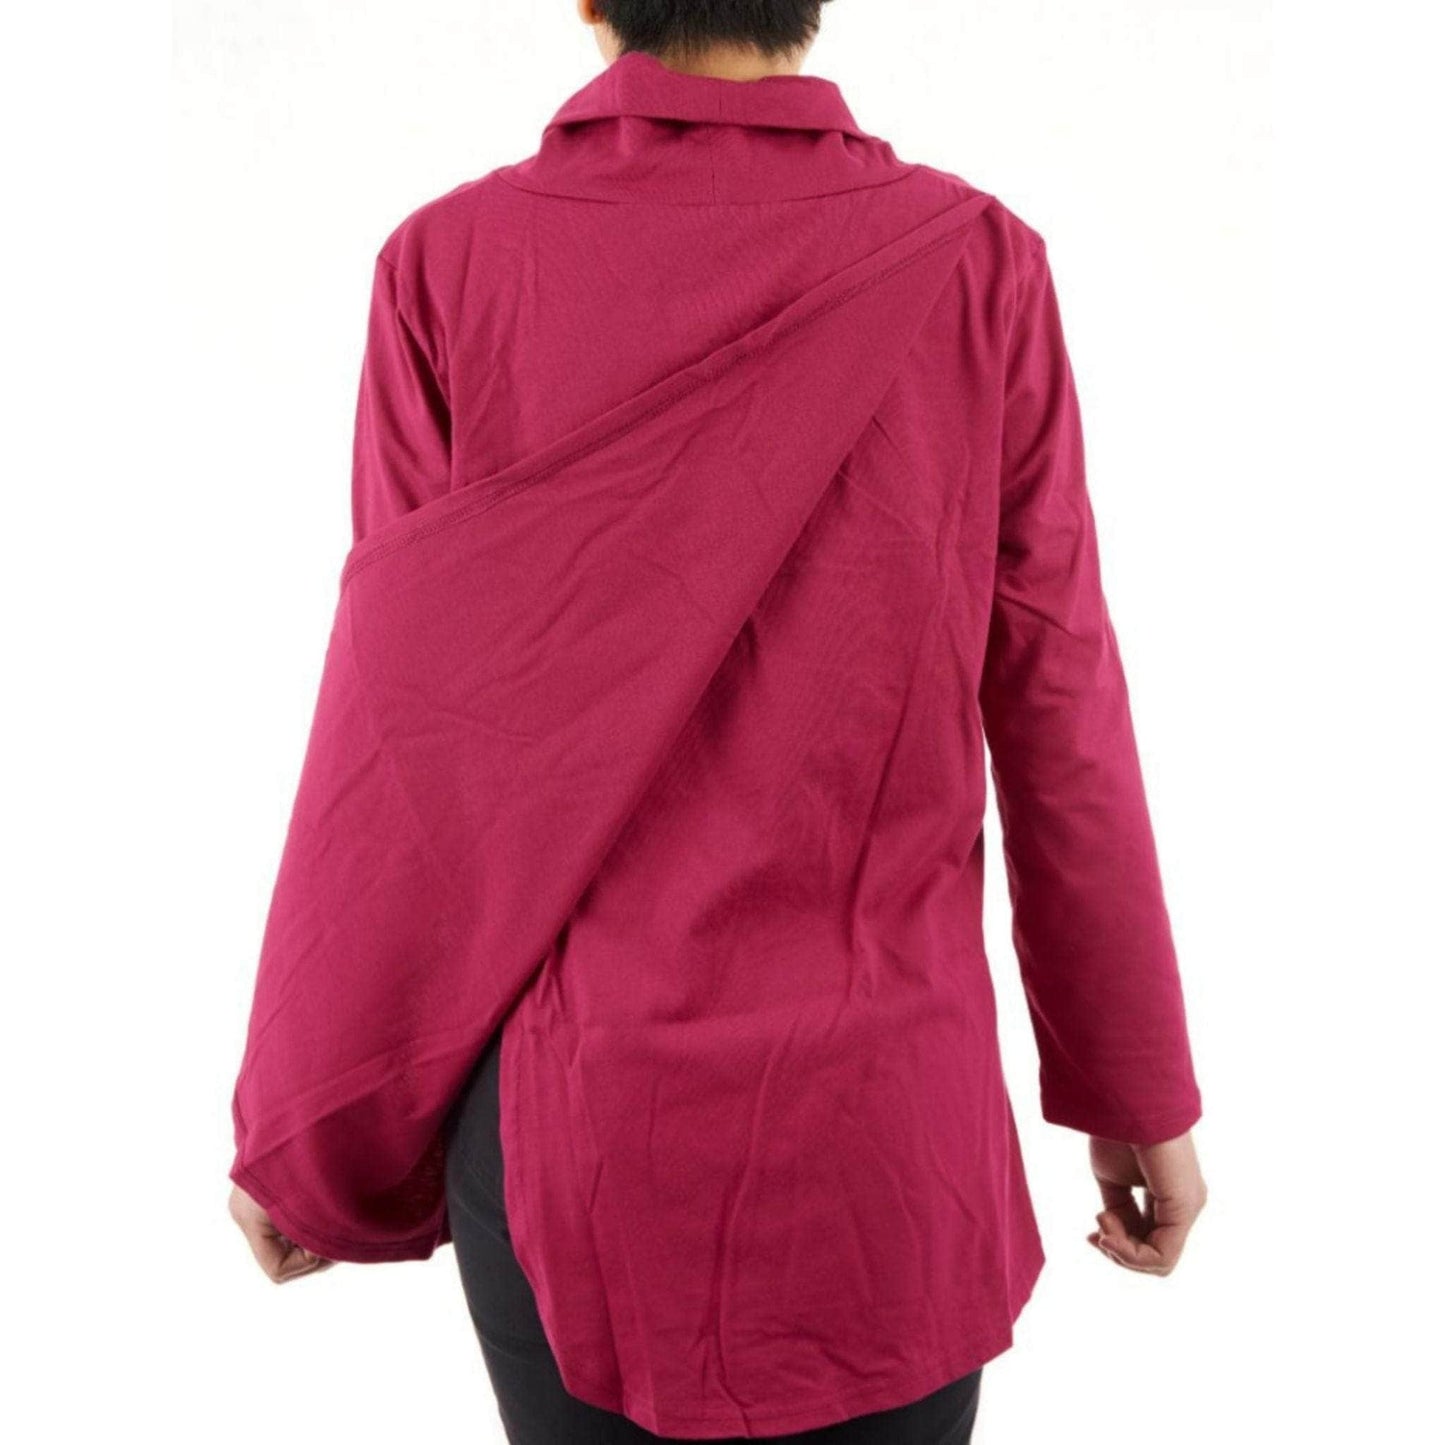 CC Women's Eliana Long Sleeve Cowl Neck Top - Dark Rose - Caring Clothing